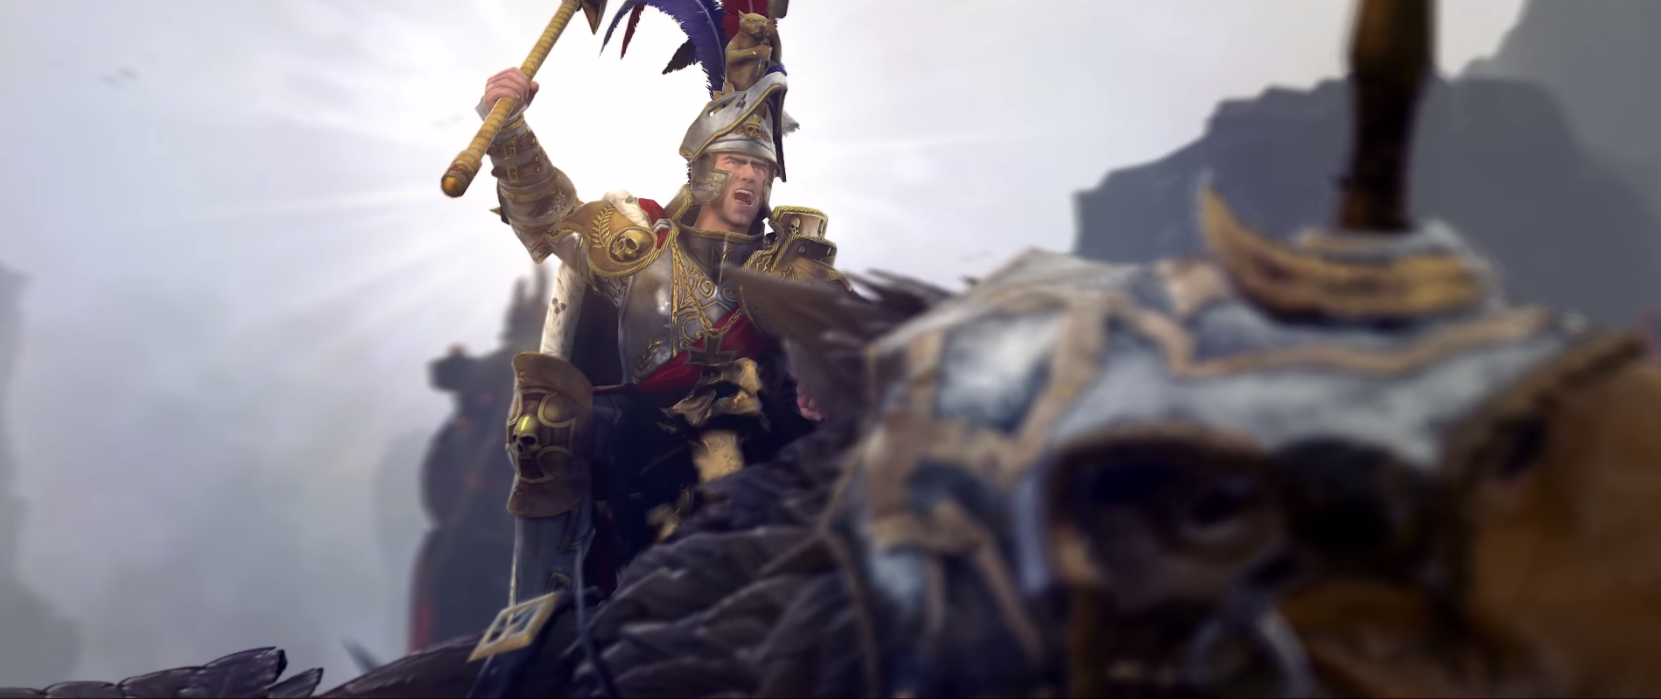 Revealed: In-Engine Trailer for “Total War: WARHAMMER” - Featuring Emperor Karl Franz